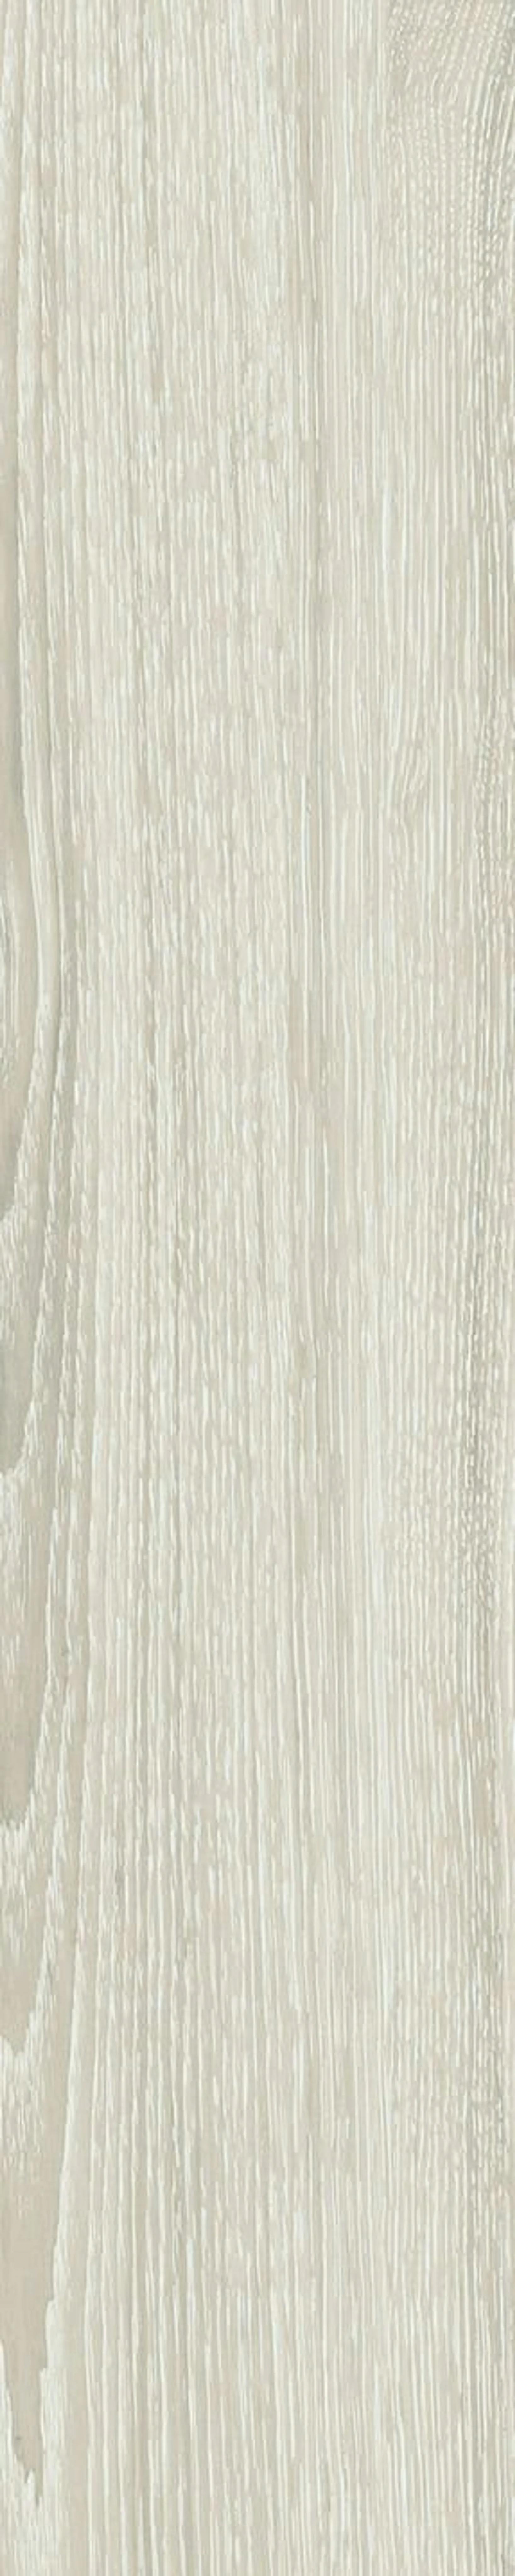 Tile Face  Sartoria Pine MC80161020